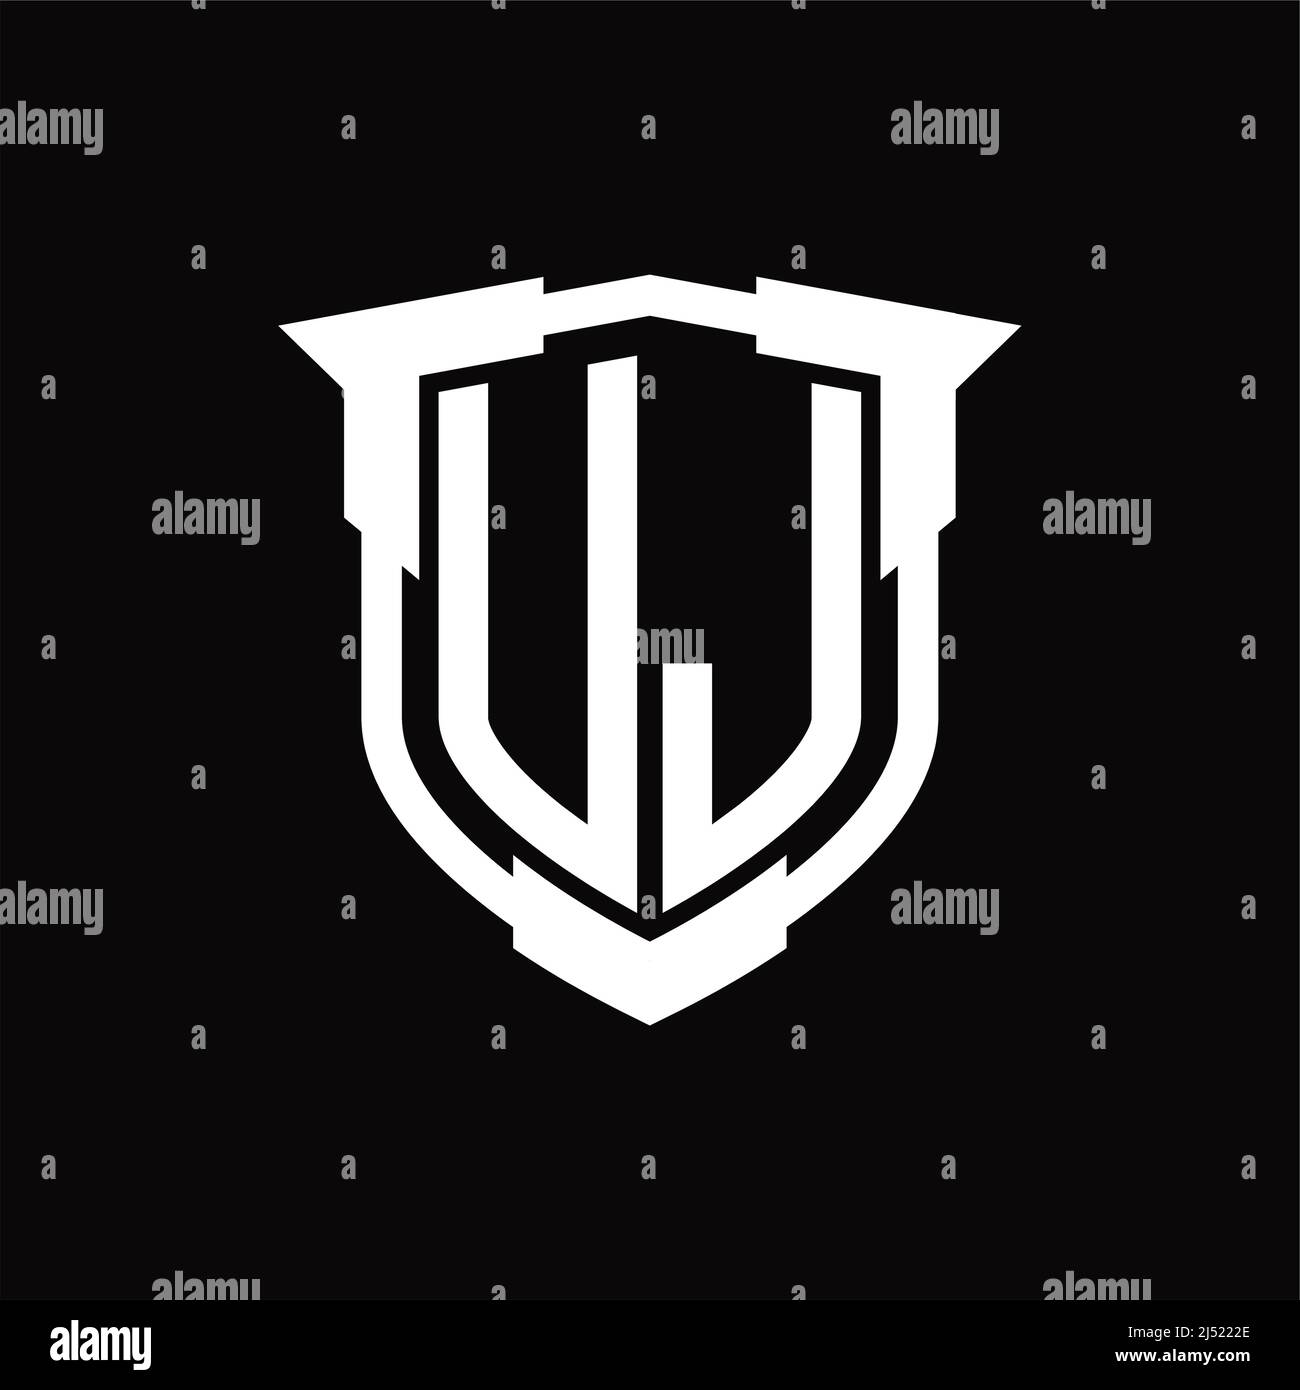 UJ Logo monogram letter with shield shape design template Stock Vector ...